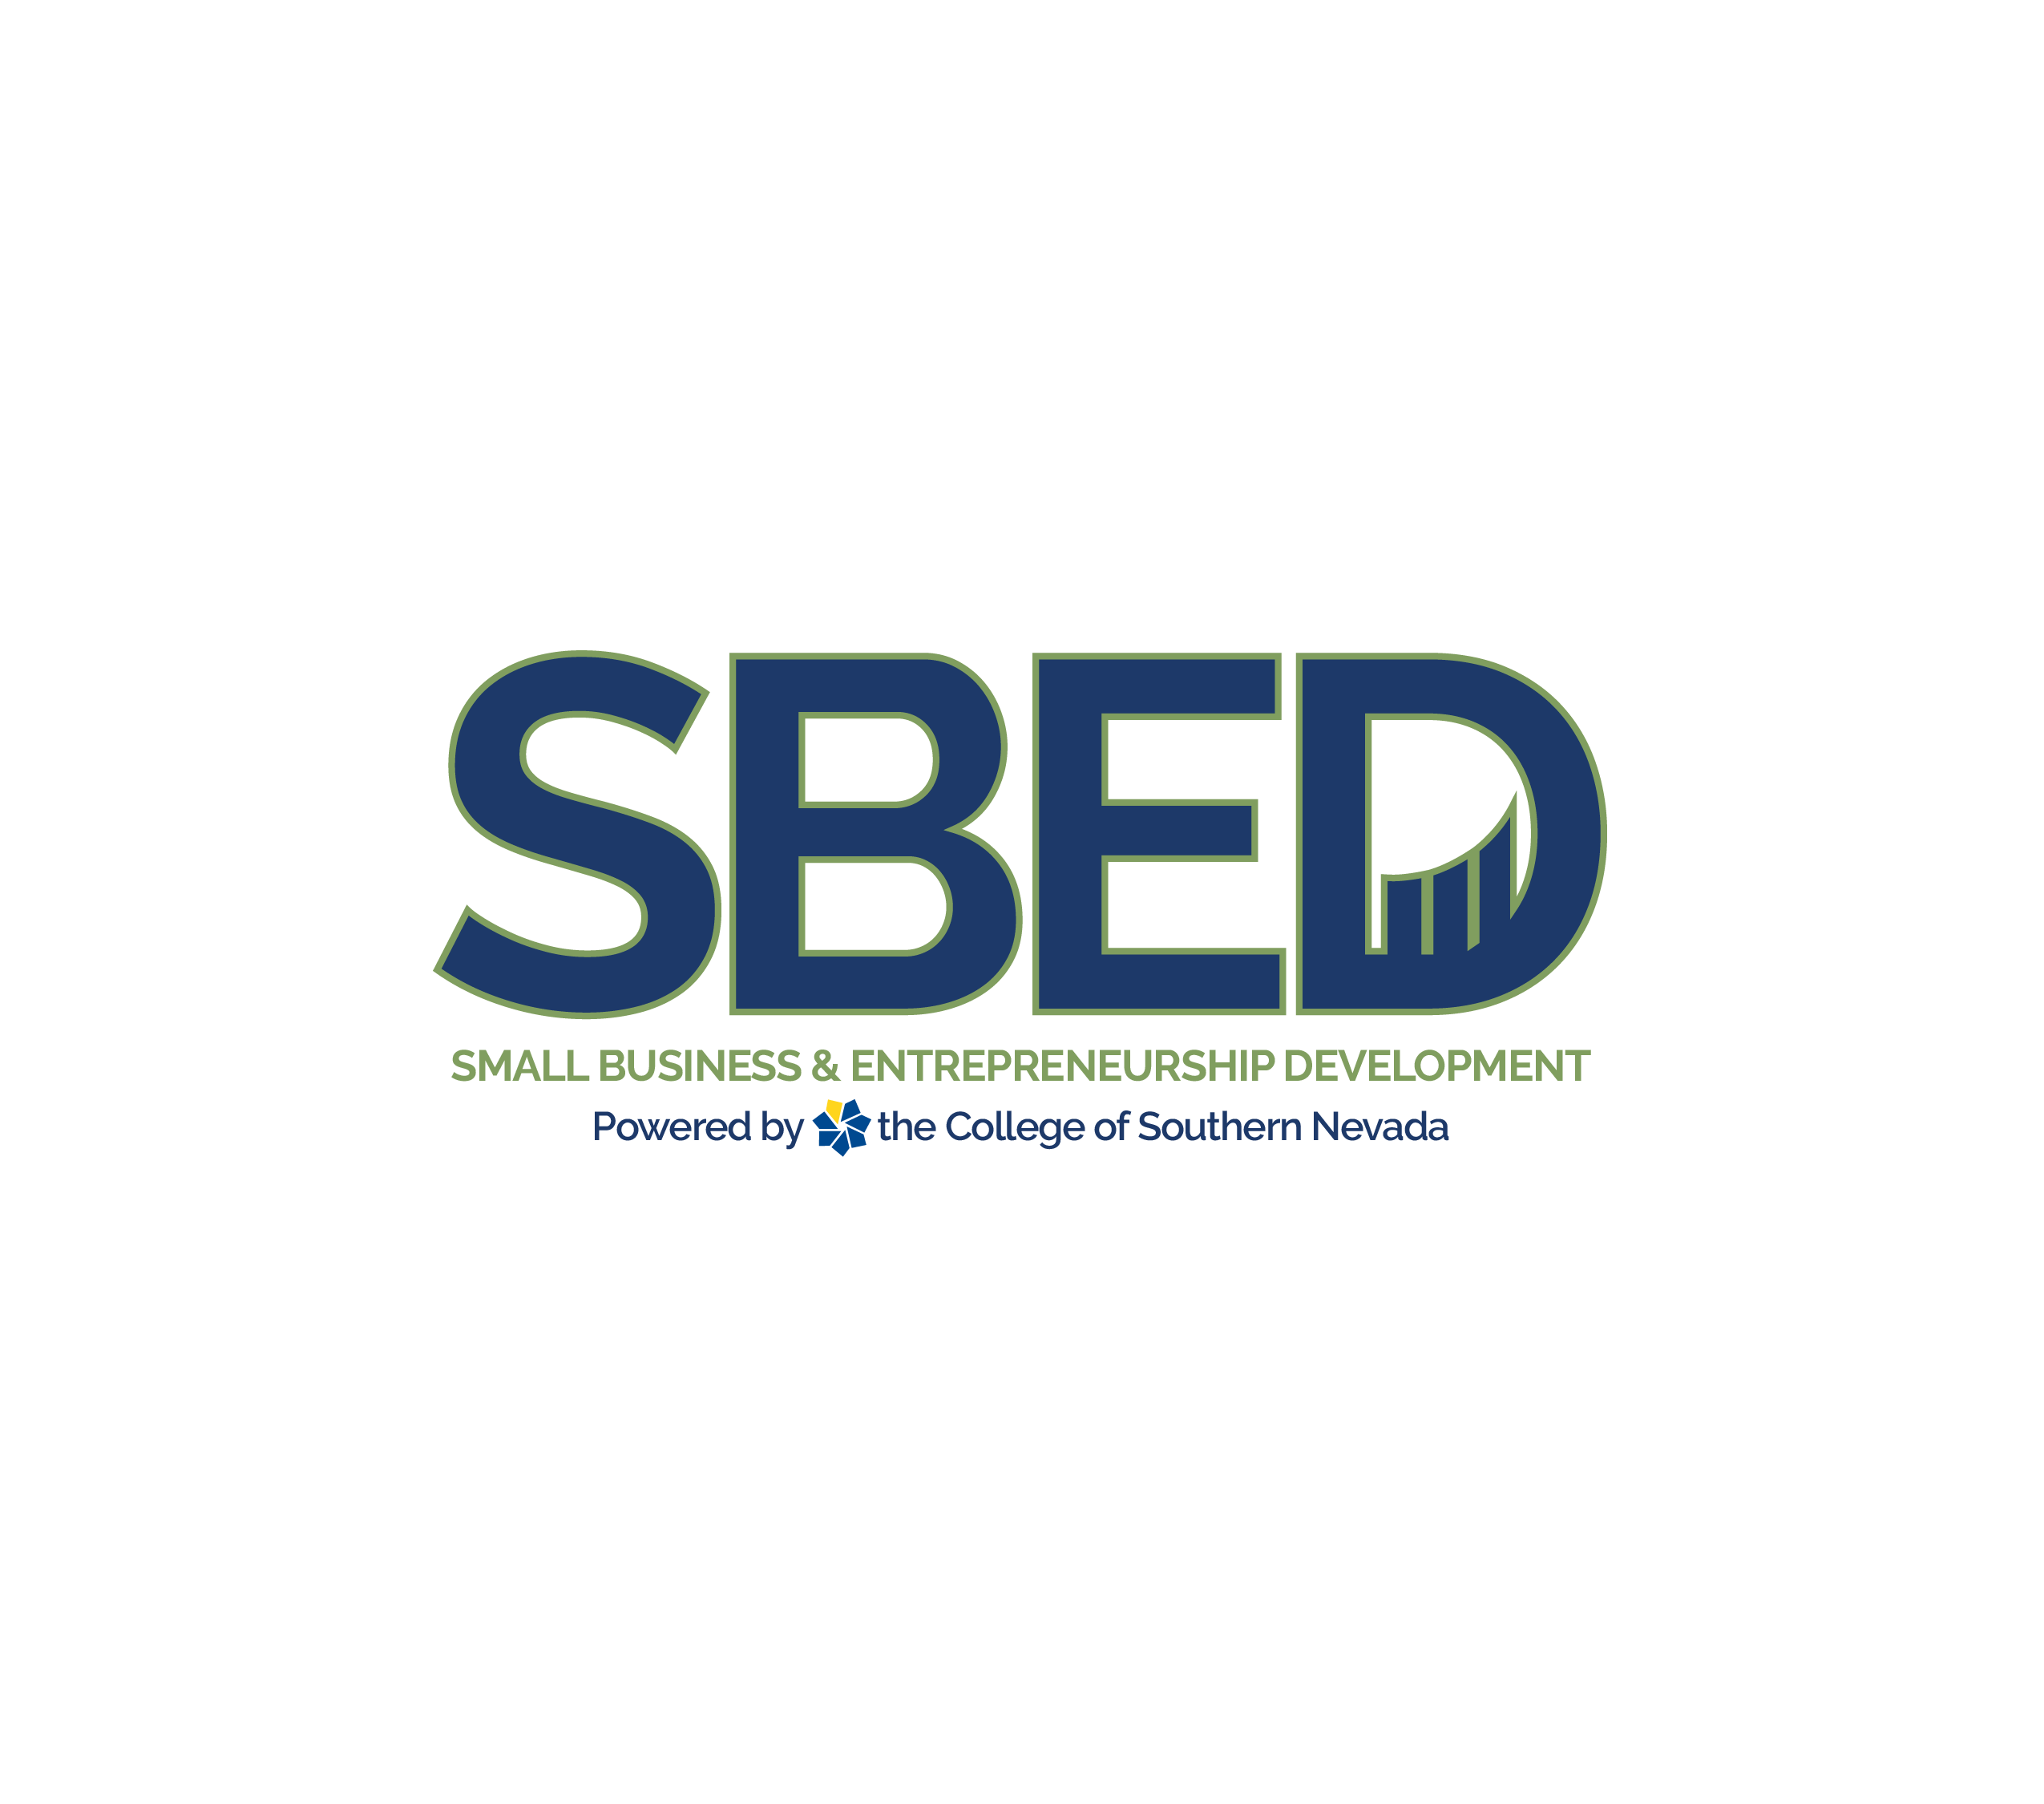 SBED_Logo